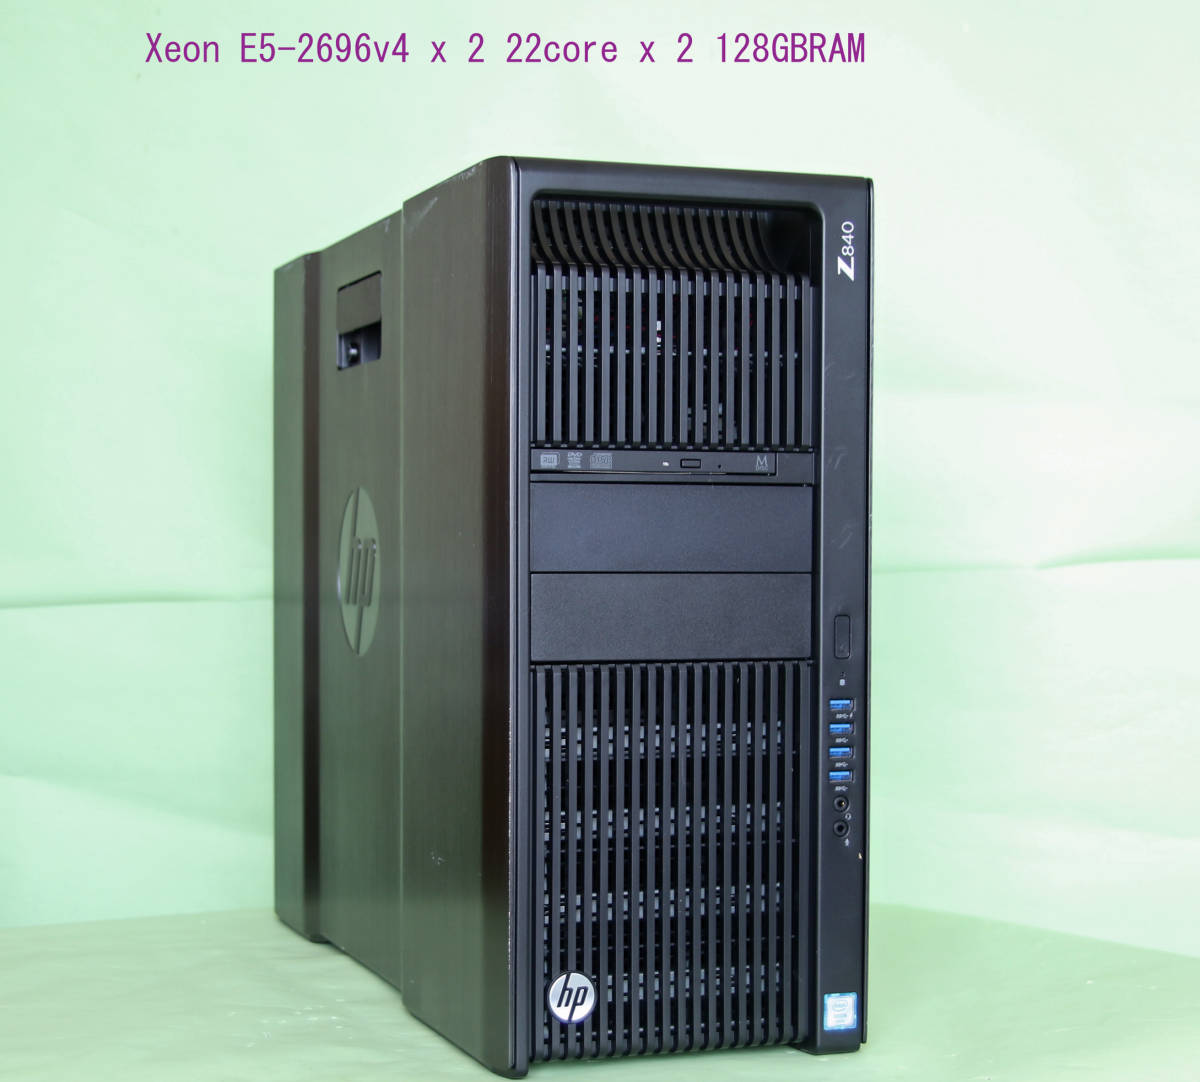 ◇Z840/Xeon E5-2696v4 x2(22coreｘ2 44threadsx2 )PCIe NVMe M.2 SSD /128GB RAM/Quadro M4000/映像編集高負荷に/CAE/CAD/CAM/送料無料◇